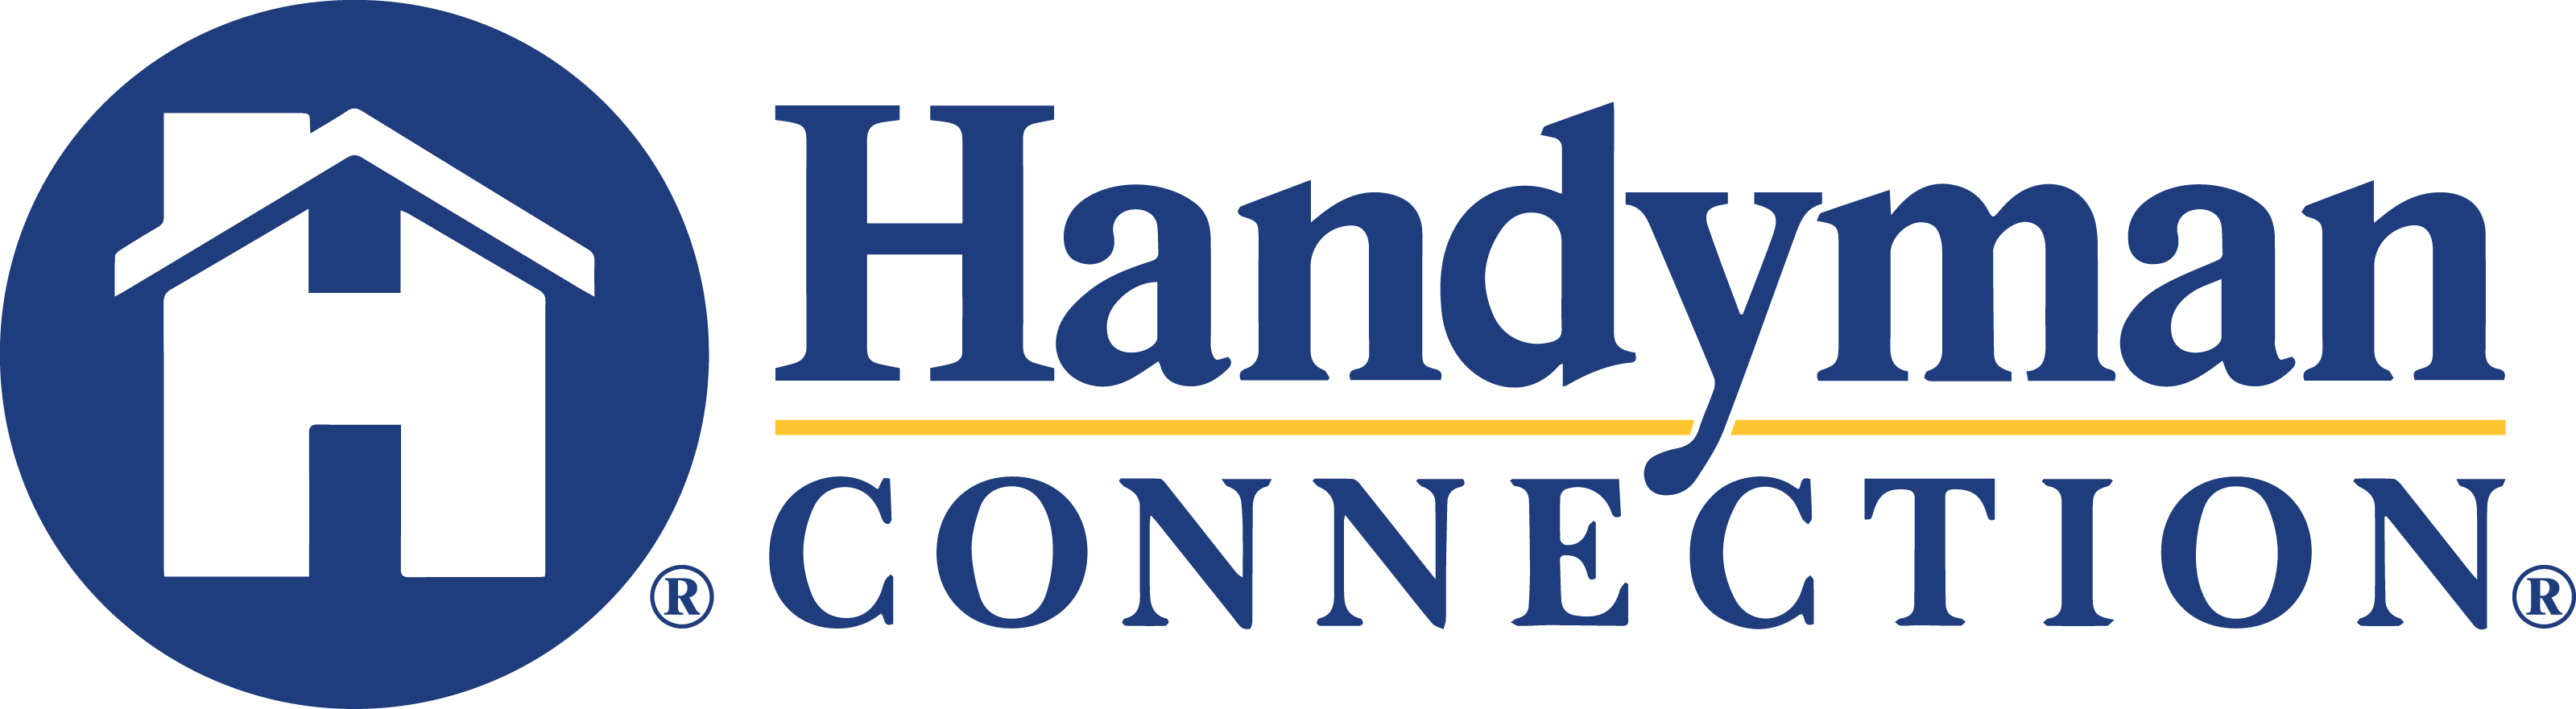 https://handymanconnection.com/grapevine/wp-content/uploads/sites/22/2021/05/HandymanConnection-logo-2.png